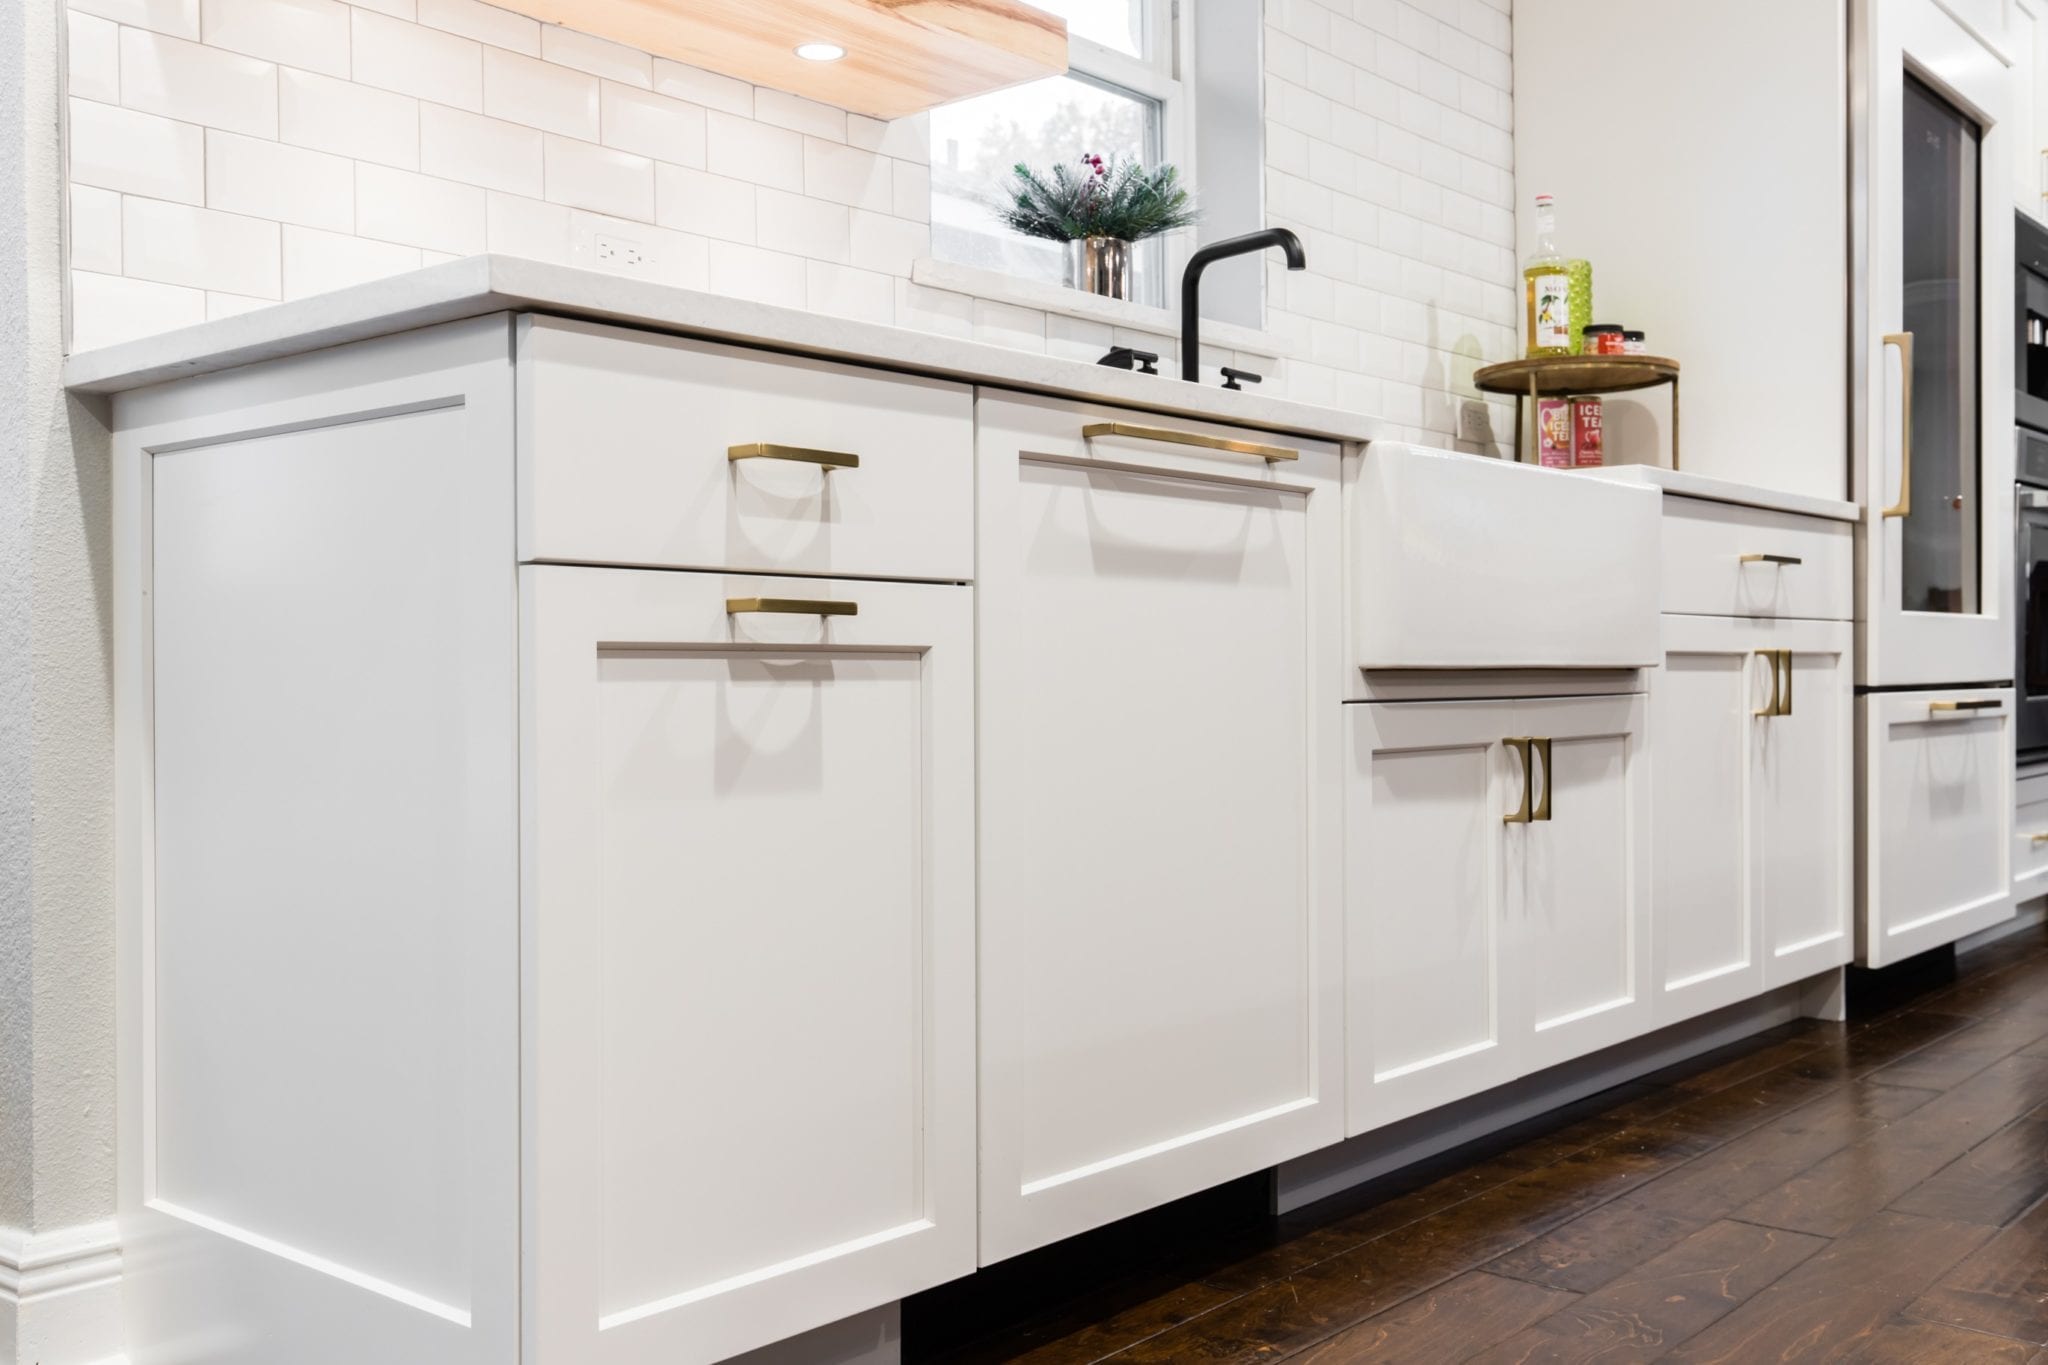 Single-Family-Home-Kitchen-Remodel-Custom-Cabinets-Backsplash-New-Wood-Floors-HighlandMeadows-75238_1